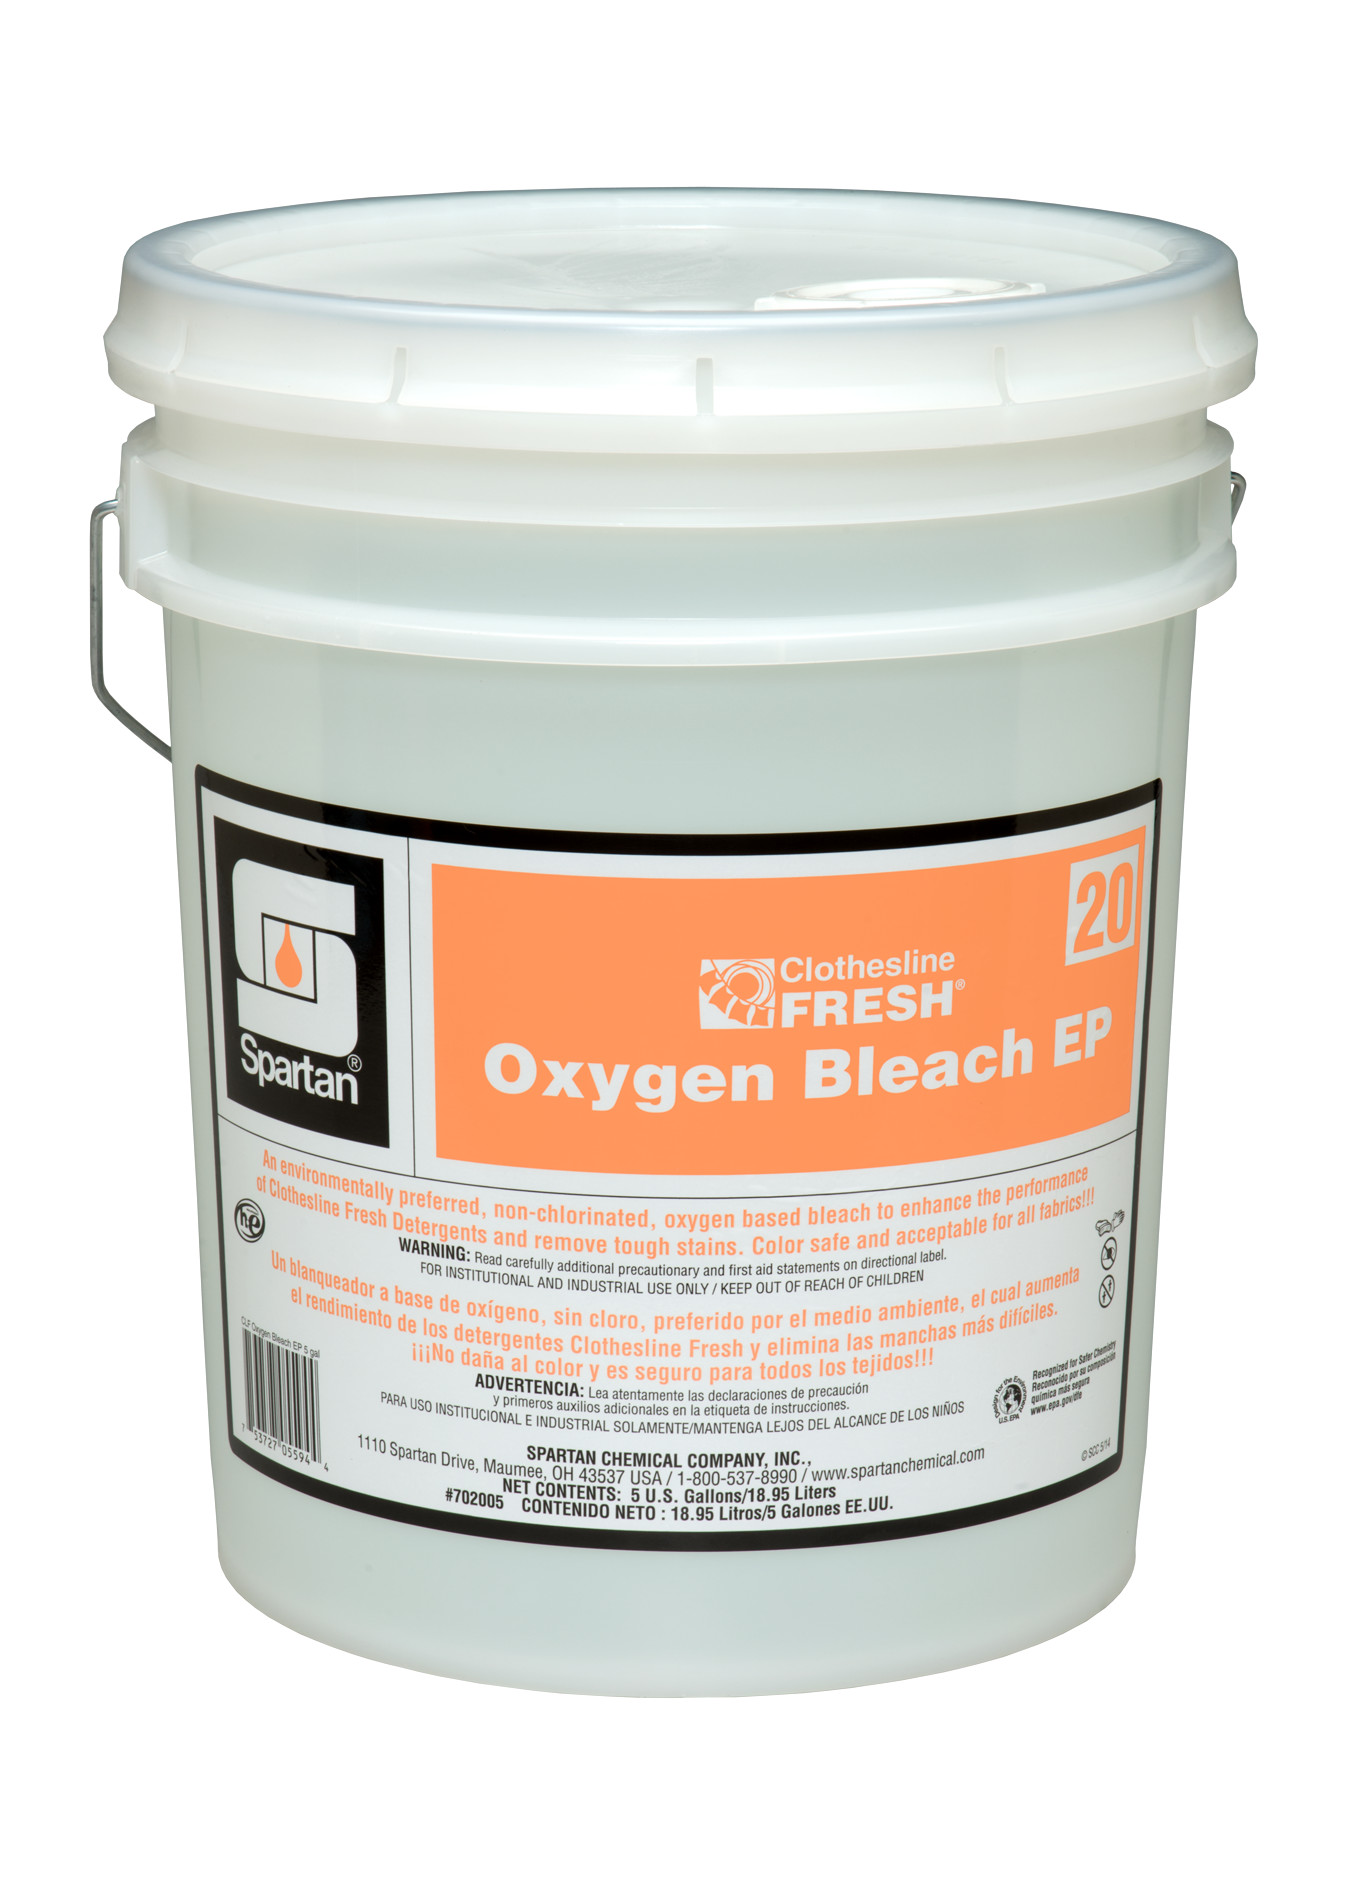 Spartan Chemical Company Clothesline Fresh Oxygen Bleach EP 20, 5 GAL PAIL